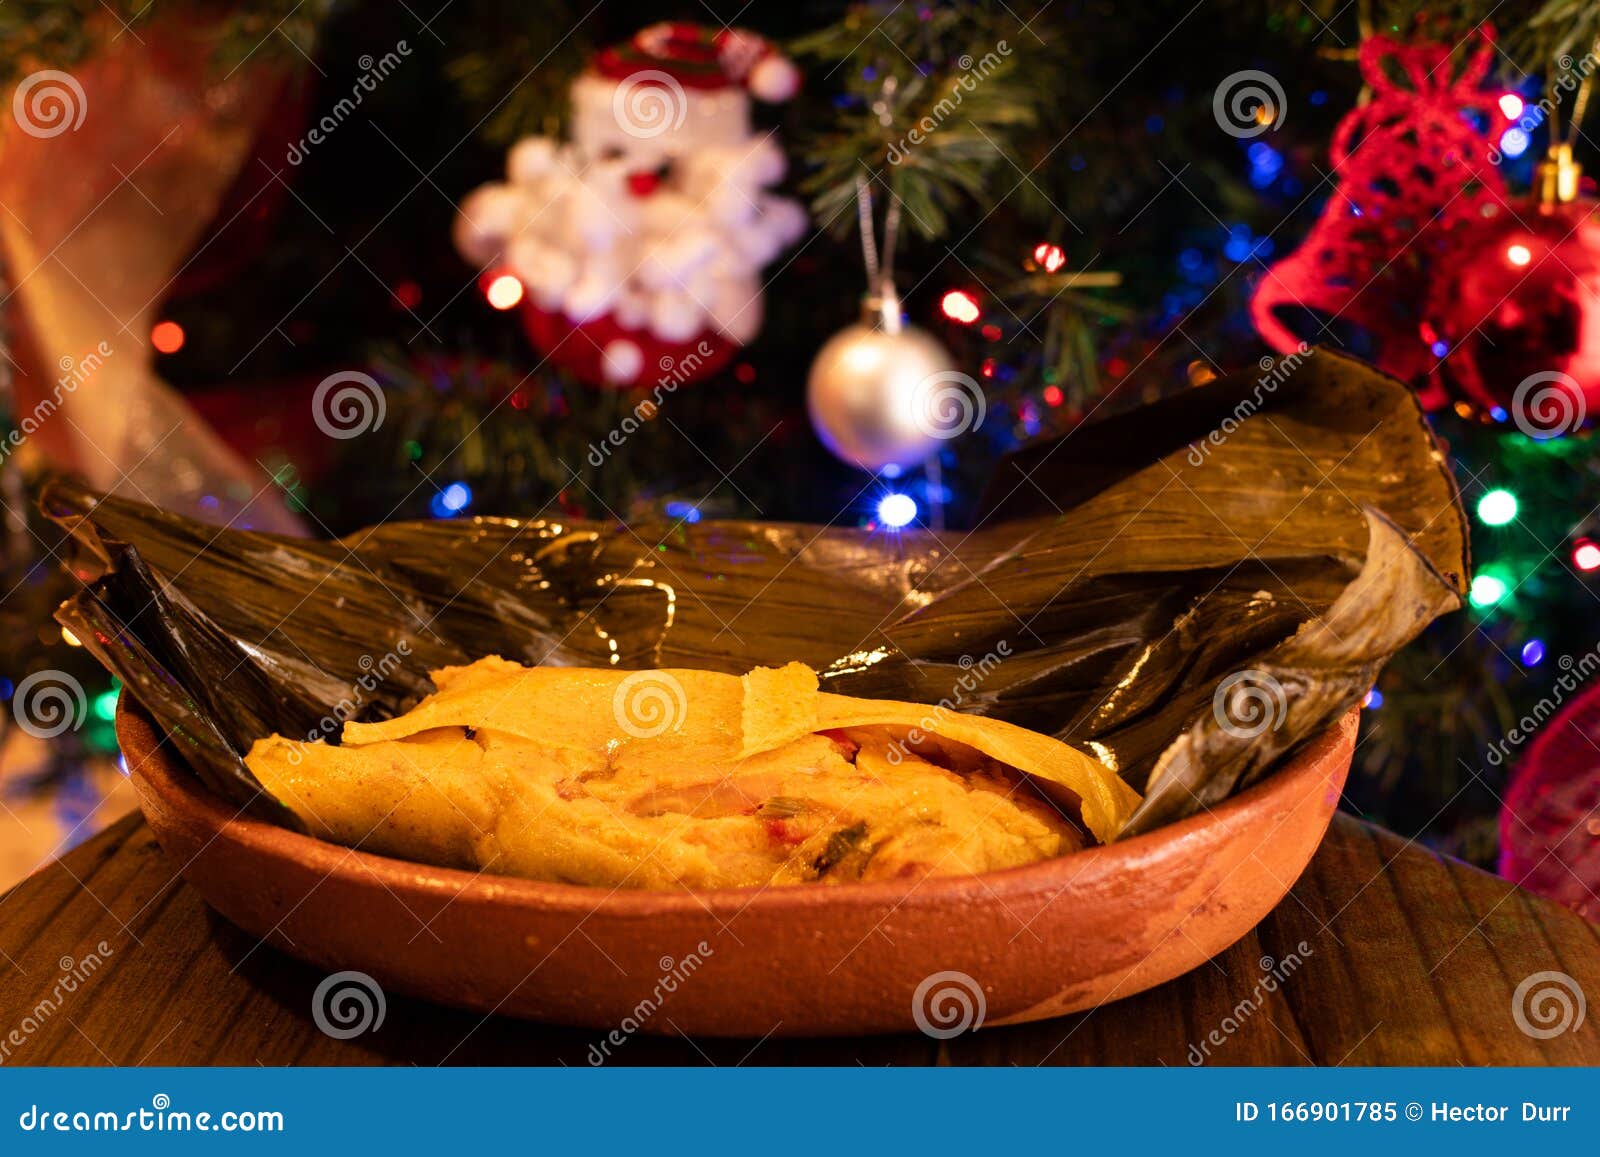 traditional venezuelan christmas food, hallaca.